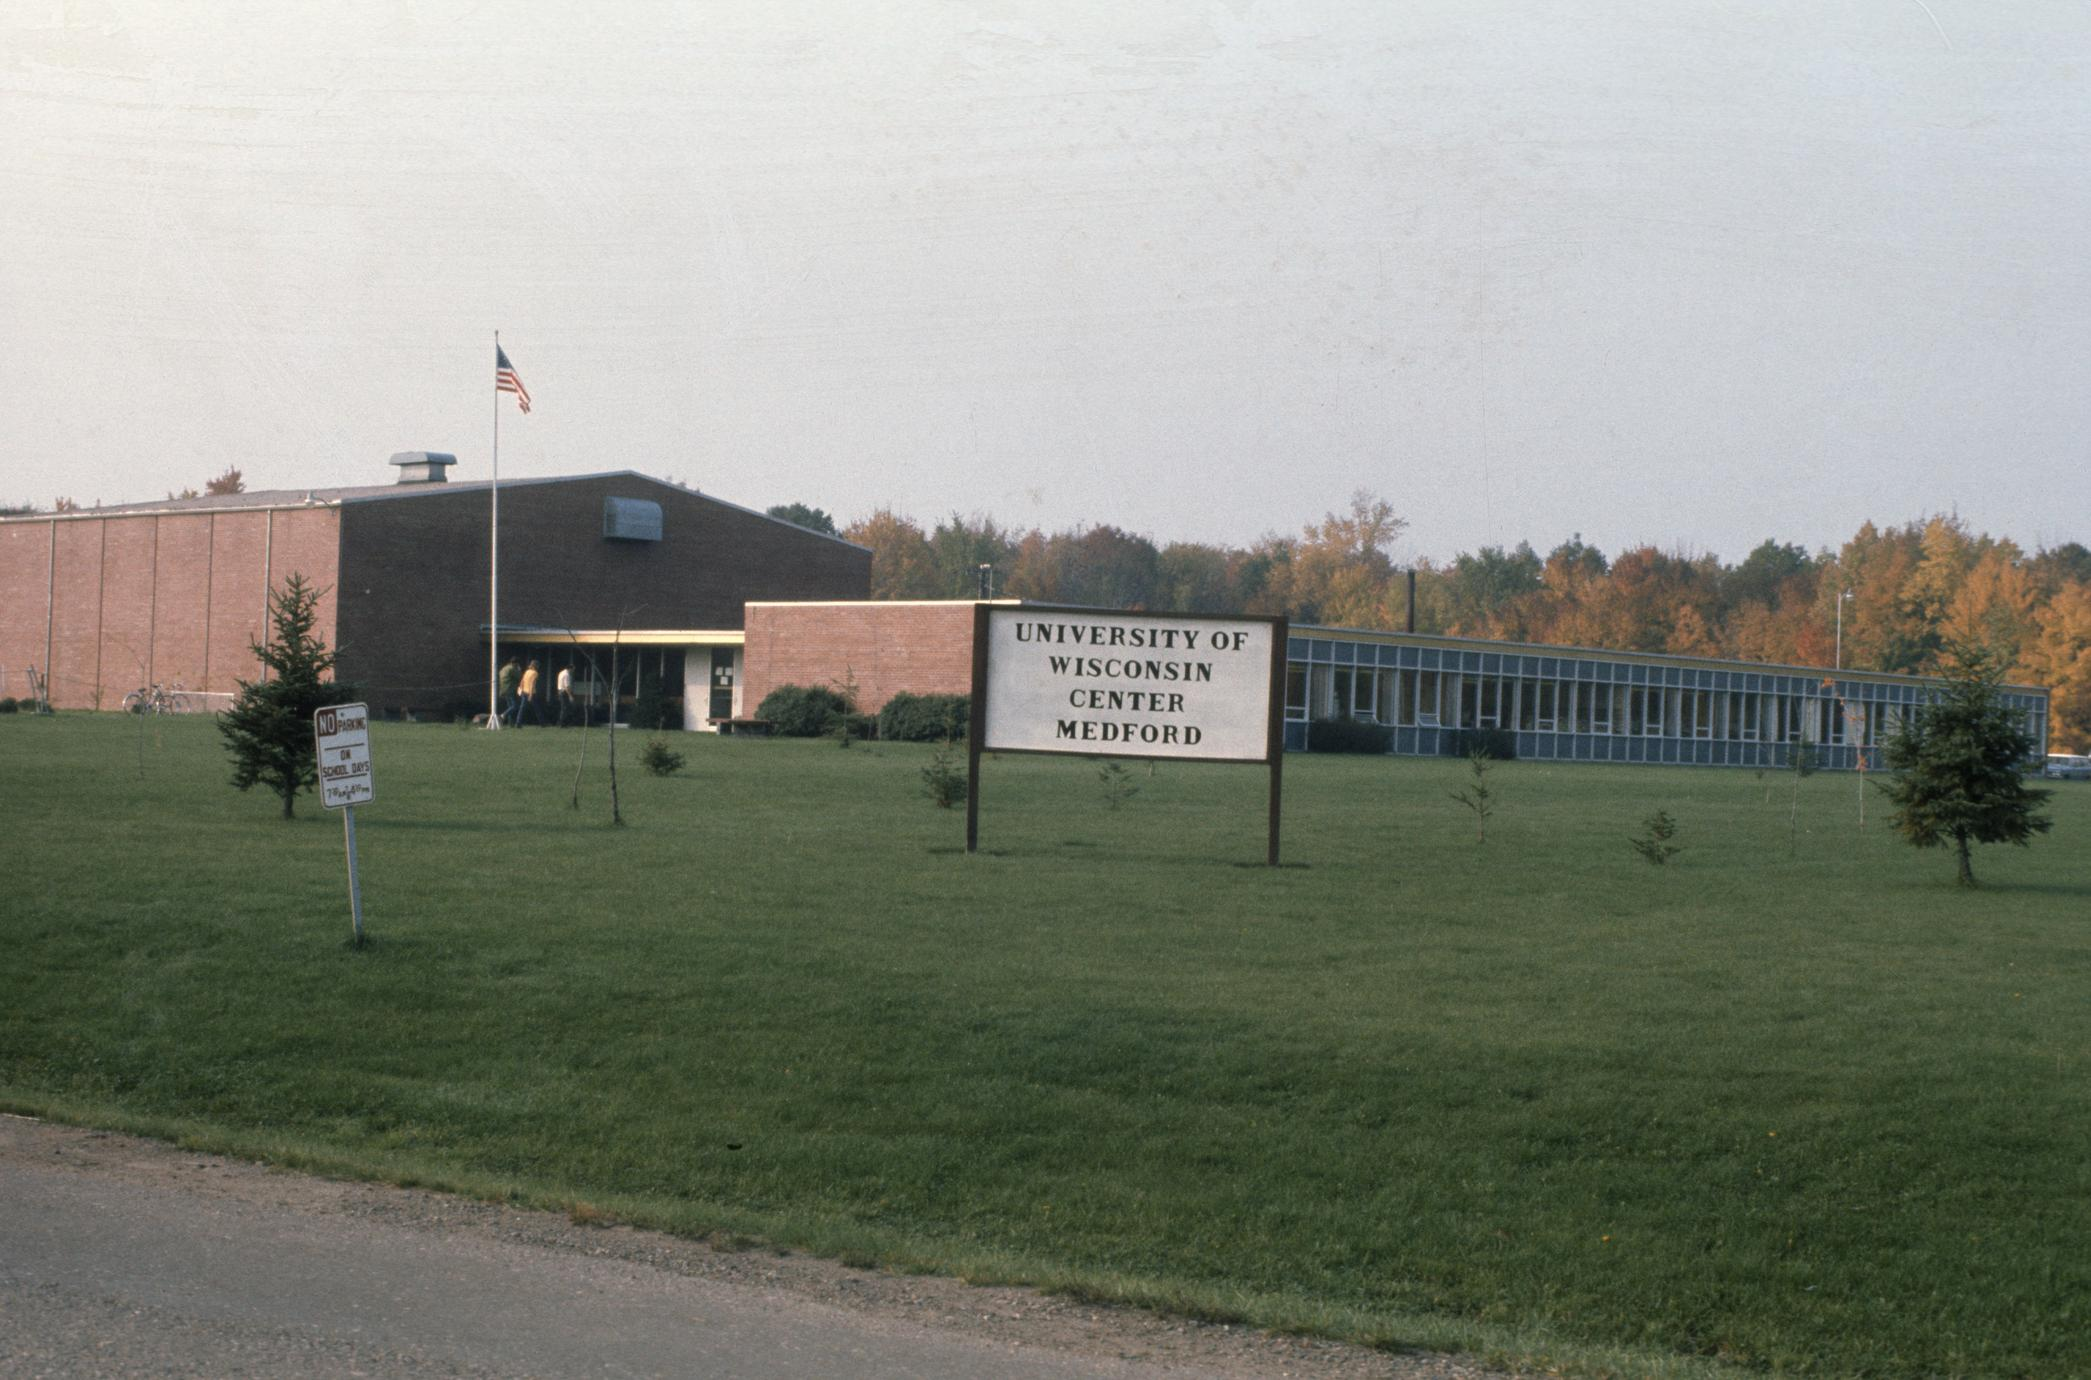 University of Wisconsin Center-Medford in 1981